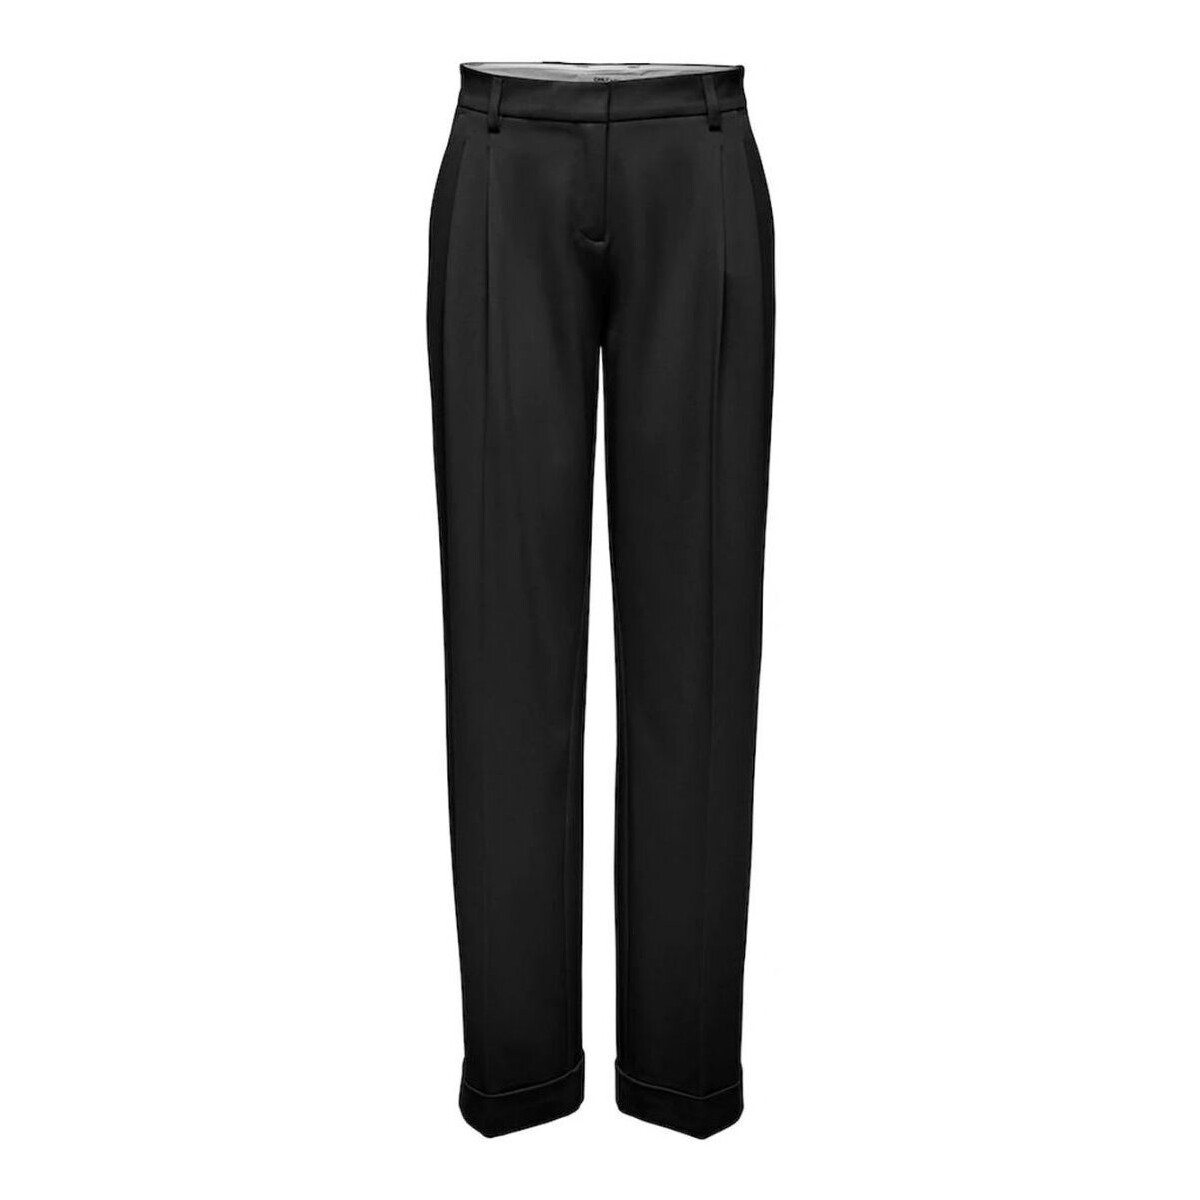 Vêtements Femme Pantalons Only 15300647 ONLSULAJAMA-BLACK Noir